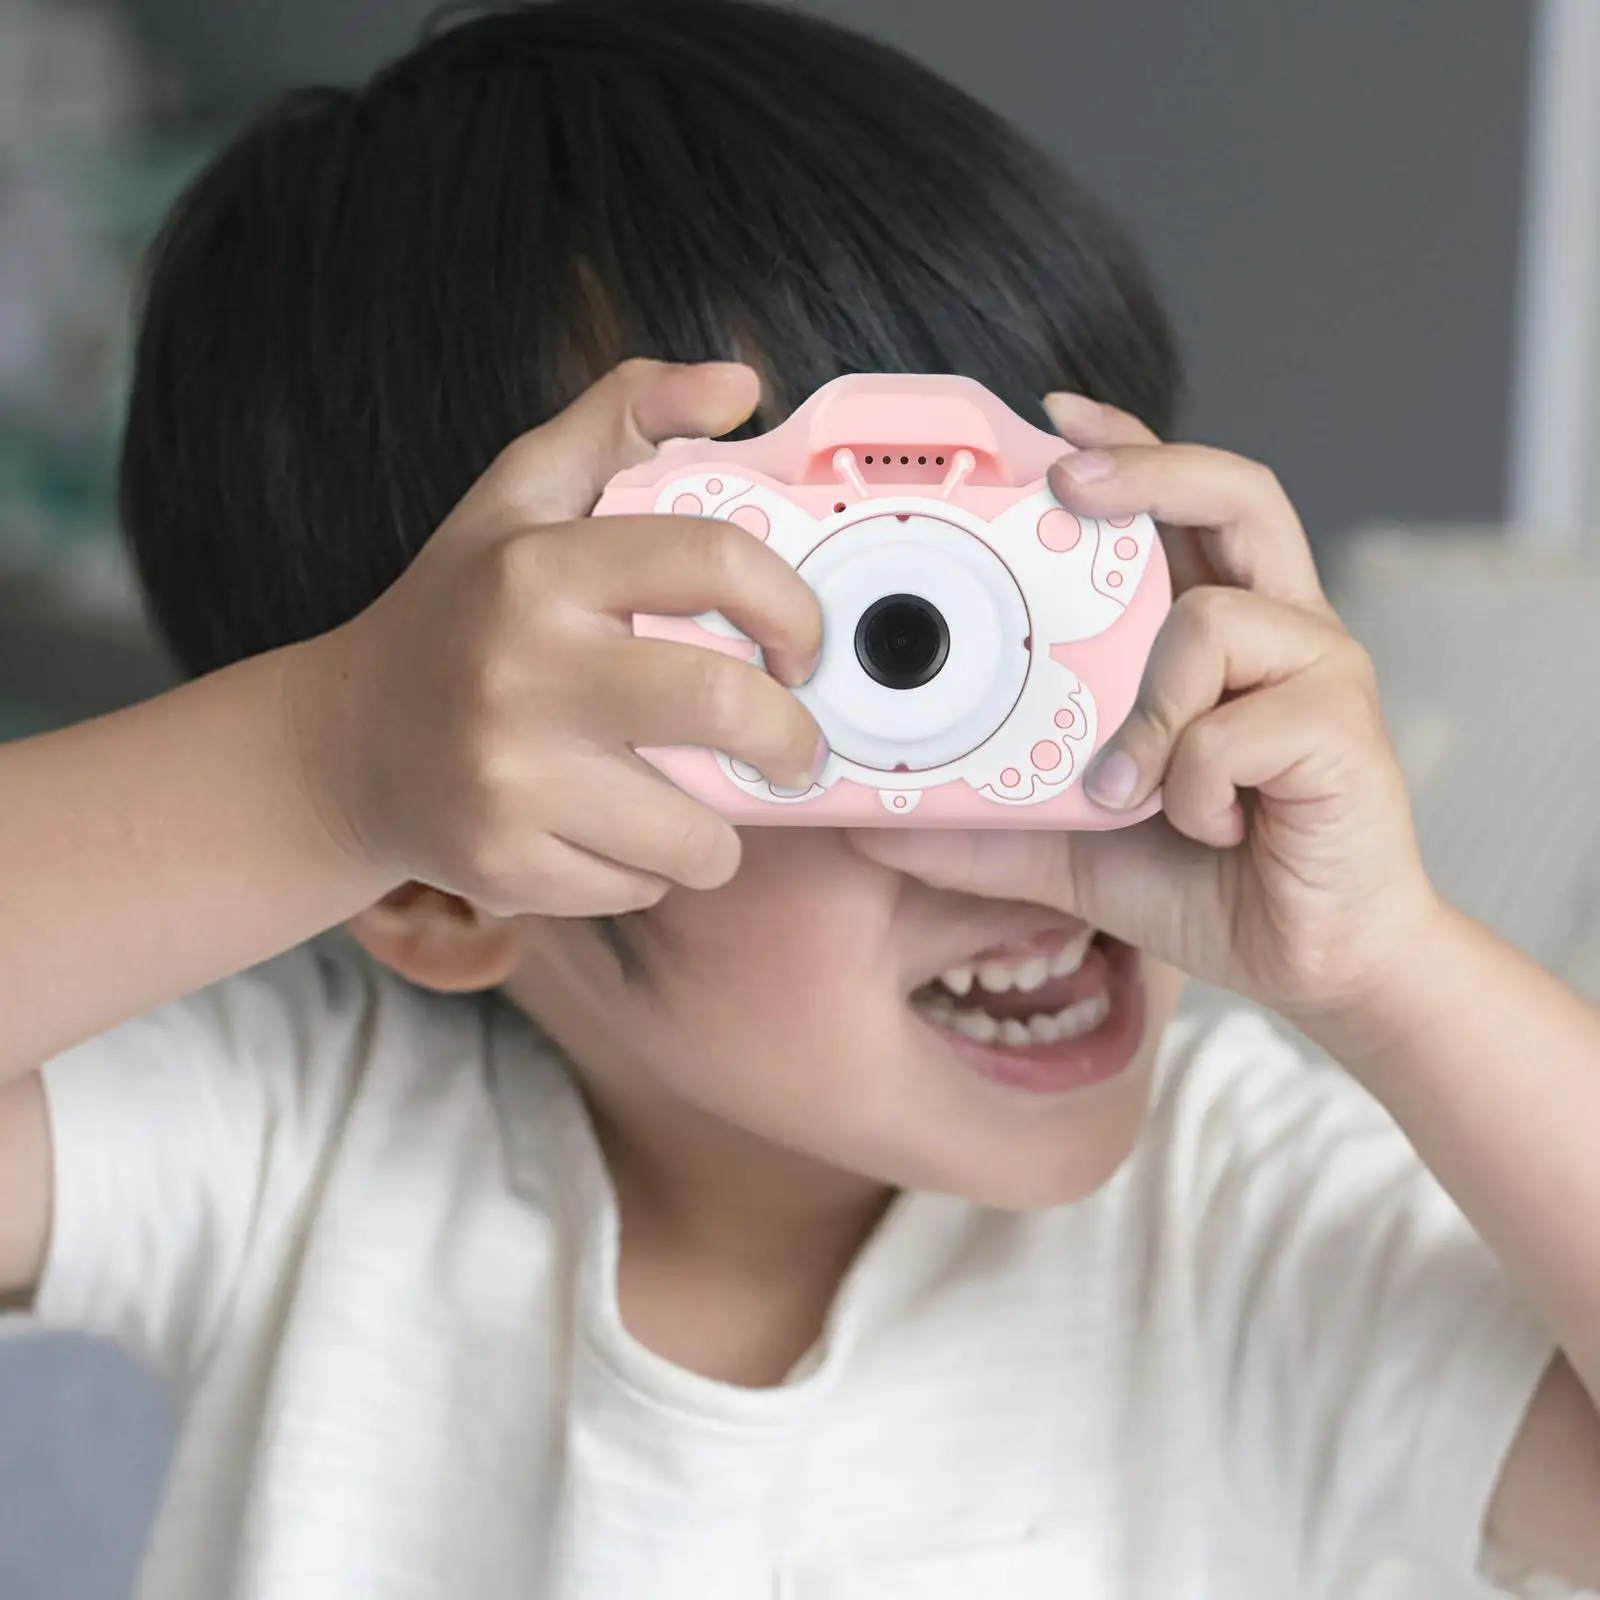 Cute Digital Camera for Kids Photo Taking Portable Educational Toys Video Recording Selfie Camera Children Digital Video Cameras